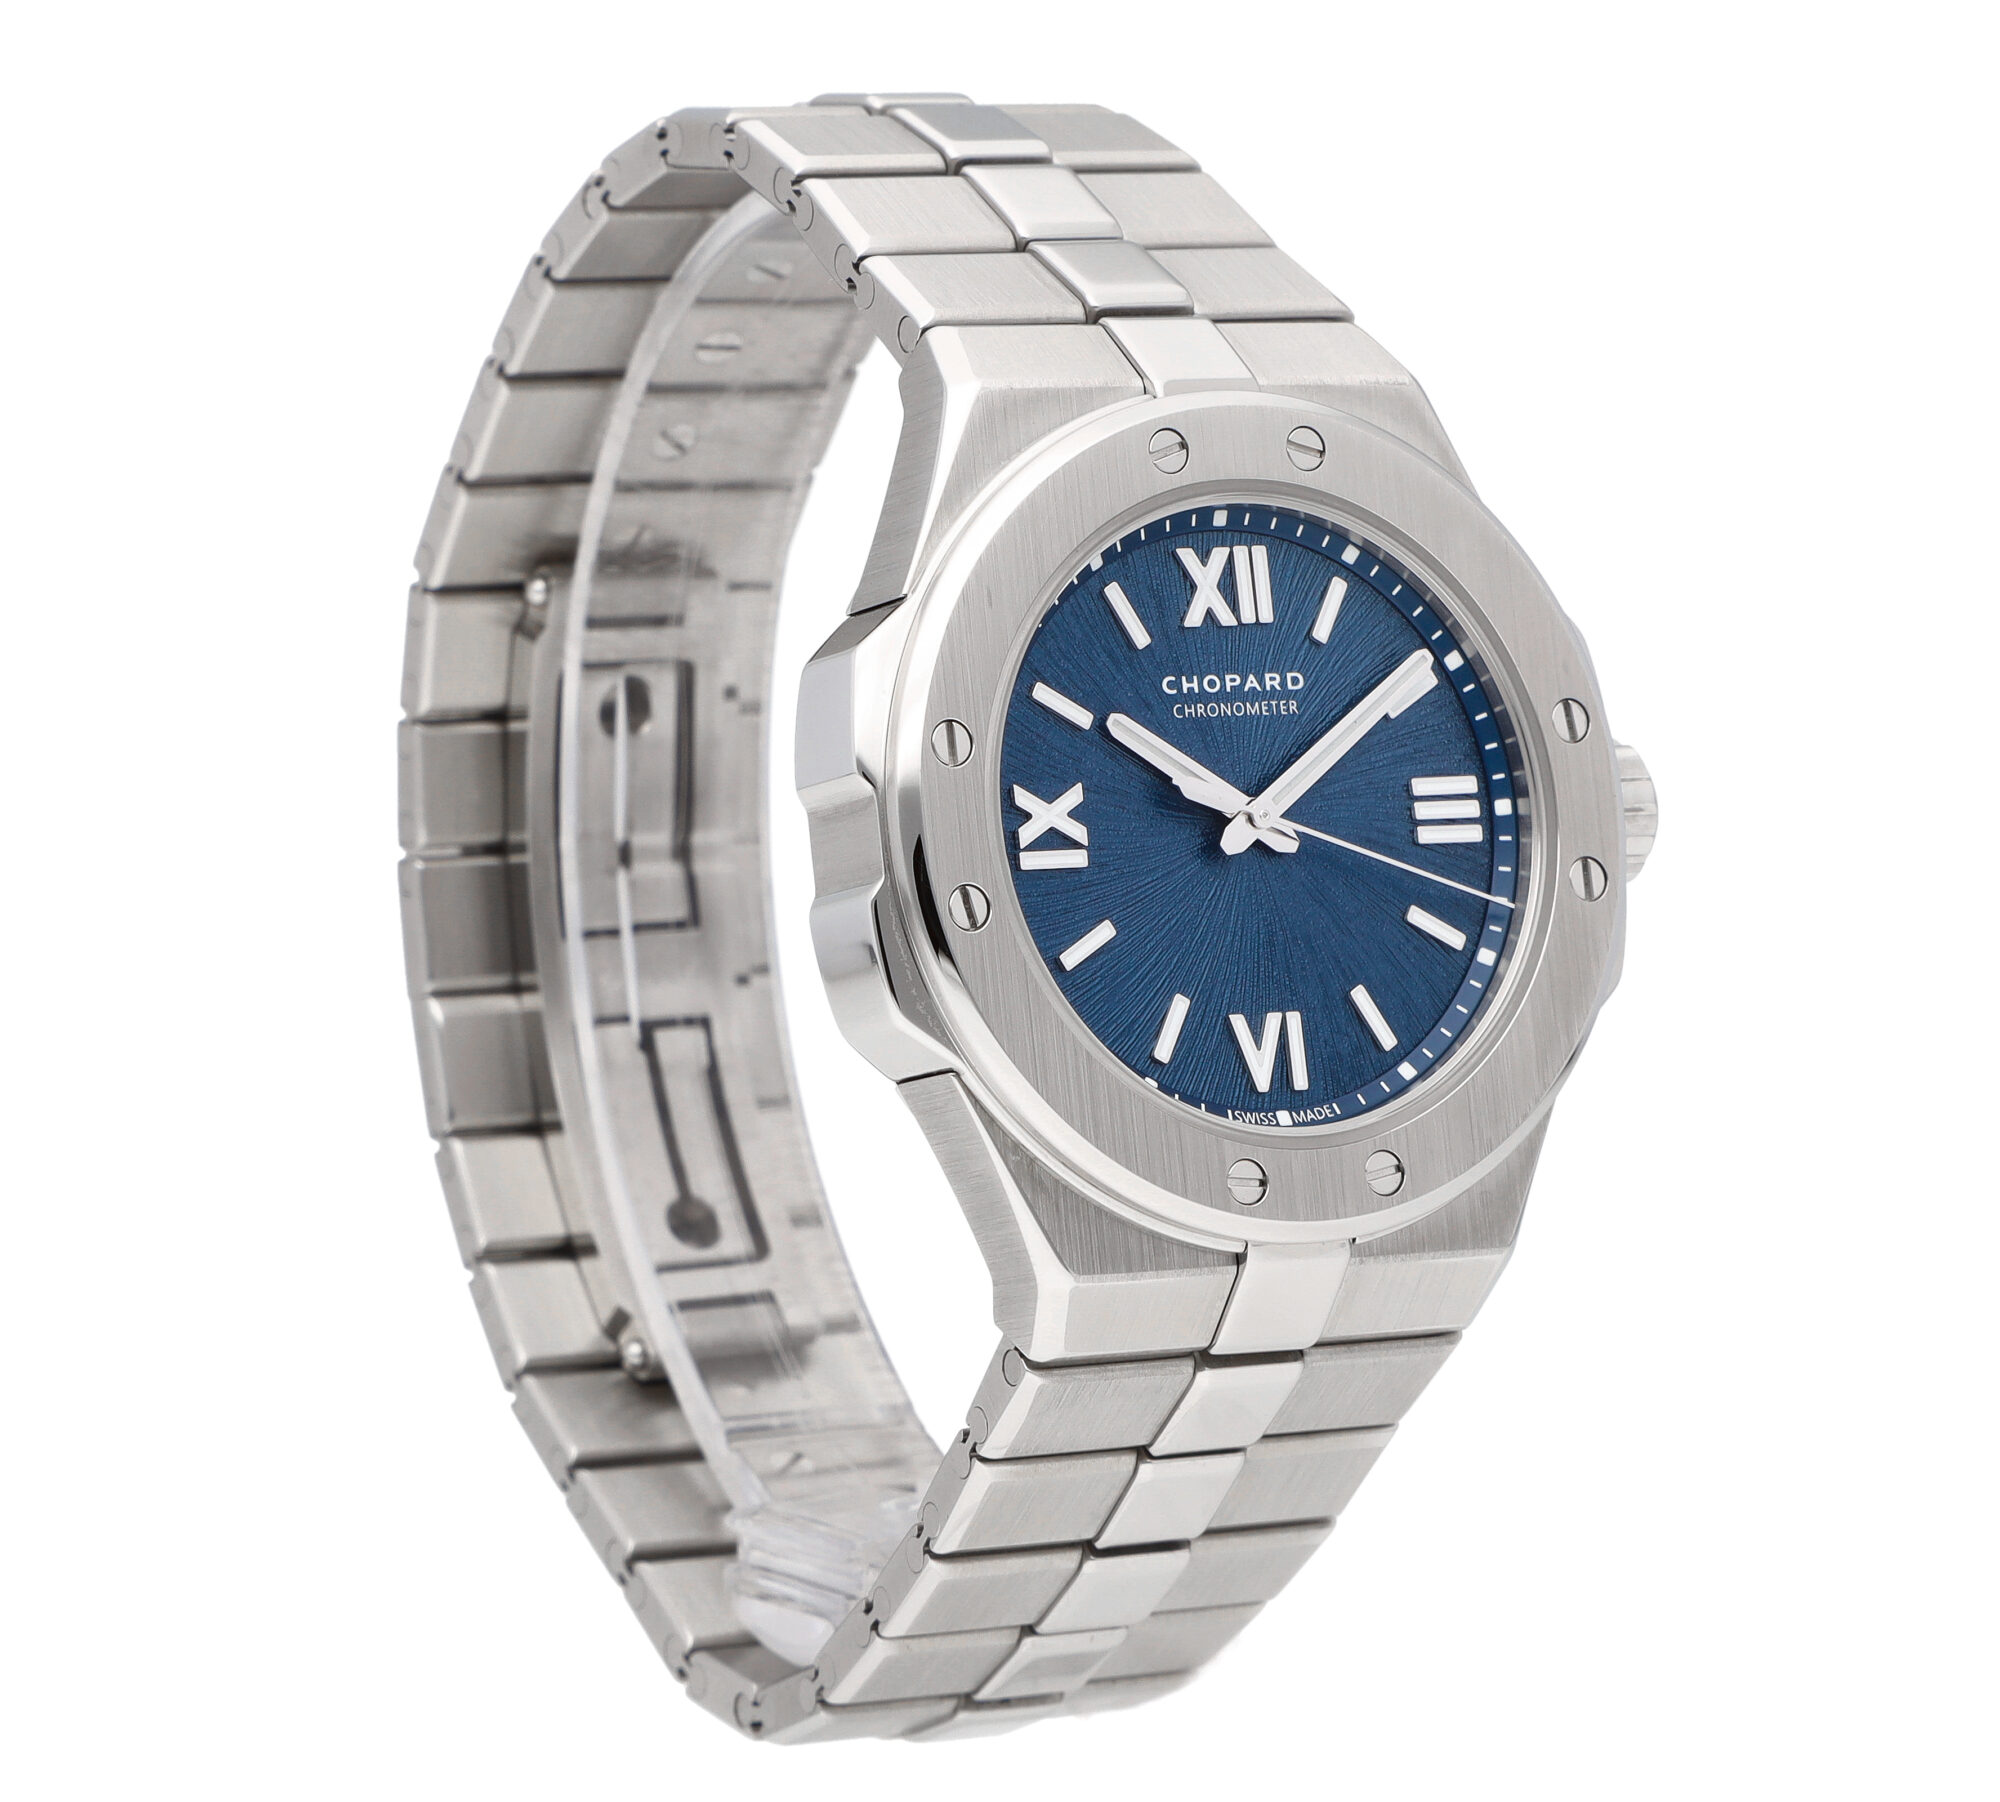 Chopard Alpine Eagle Blue Dial 36mm Automatic Watch 2998601-3001 